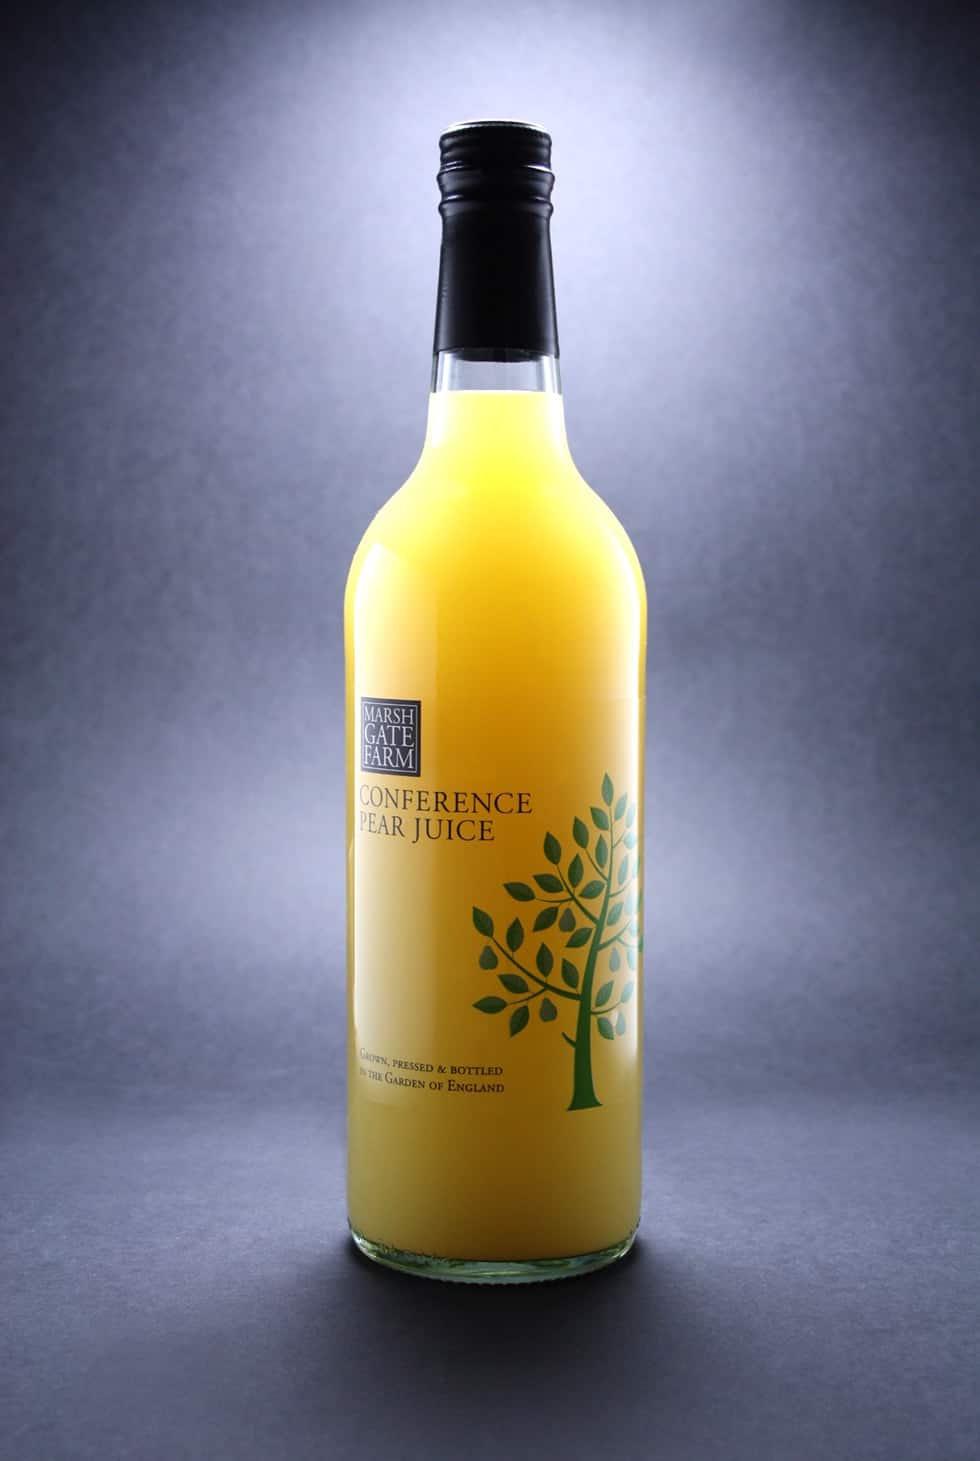 Marshgate Farm Conference pear juice bottle identity designed by Paul Cartwright Branding.